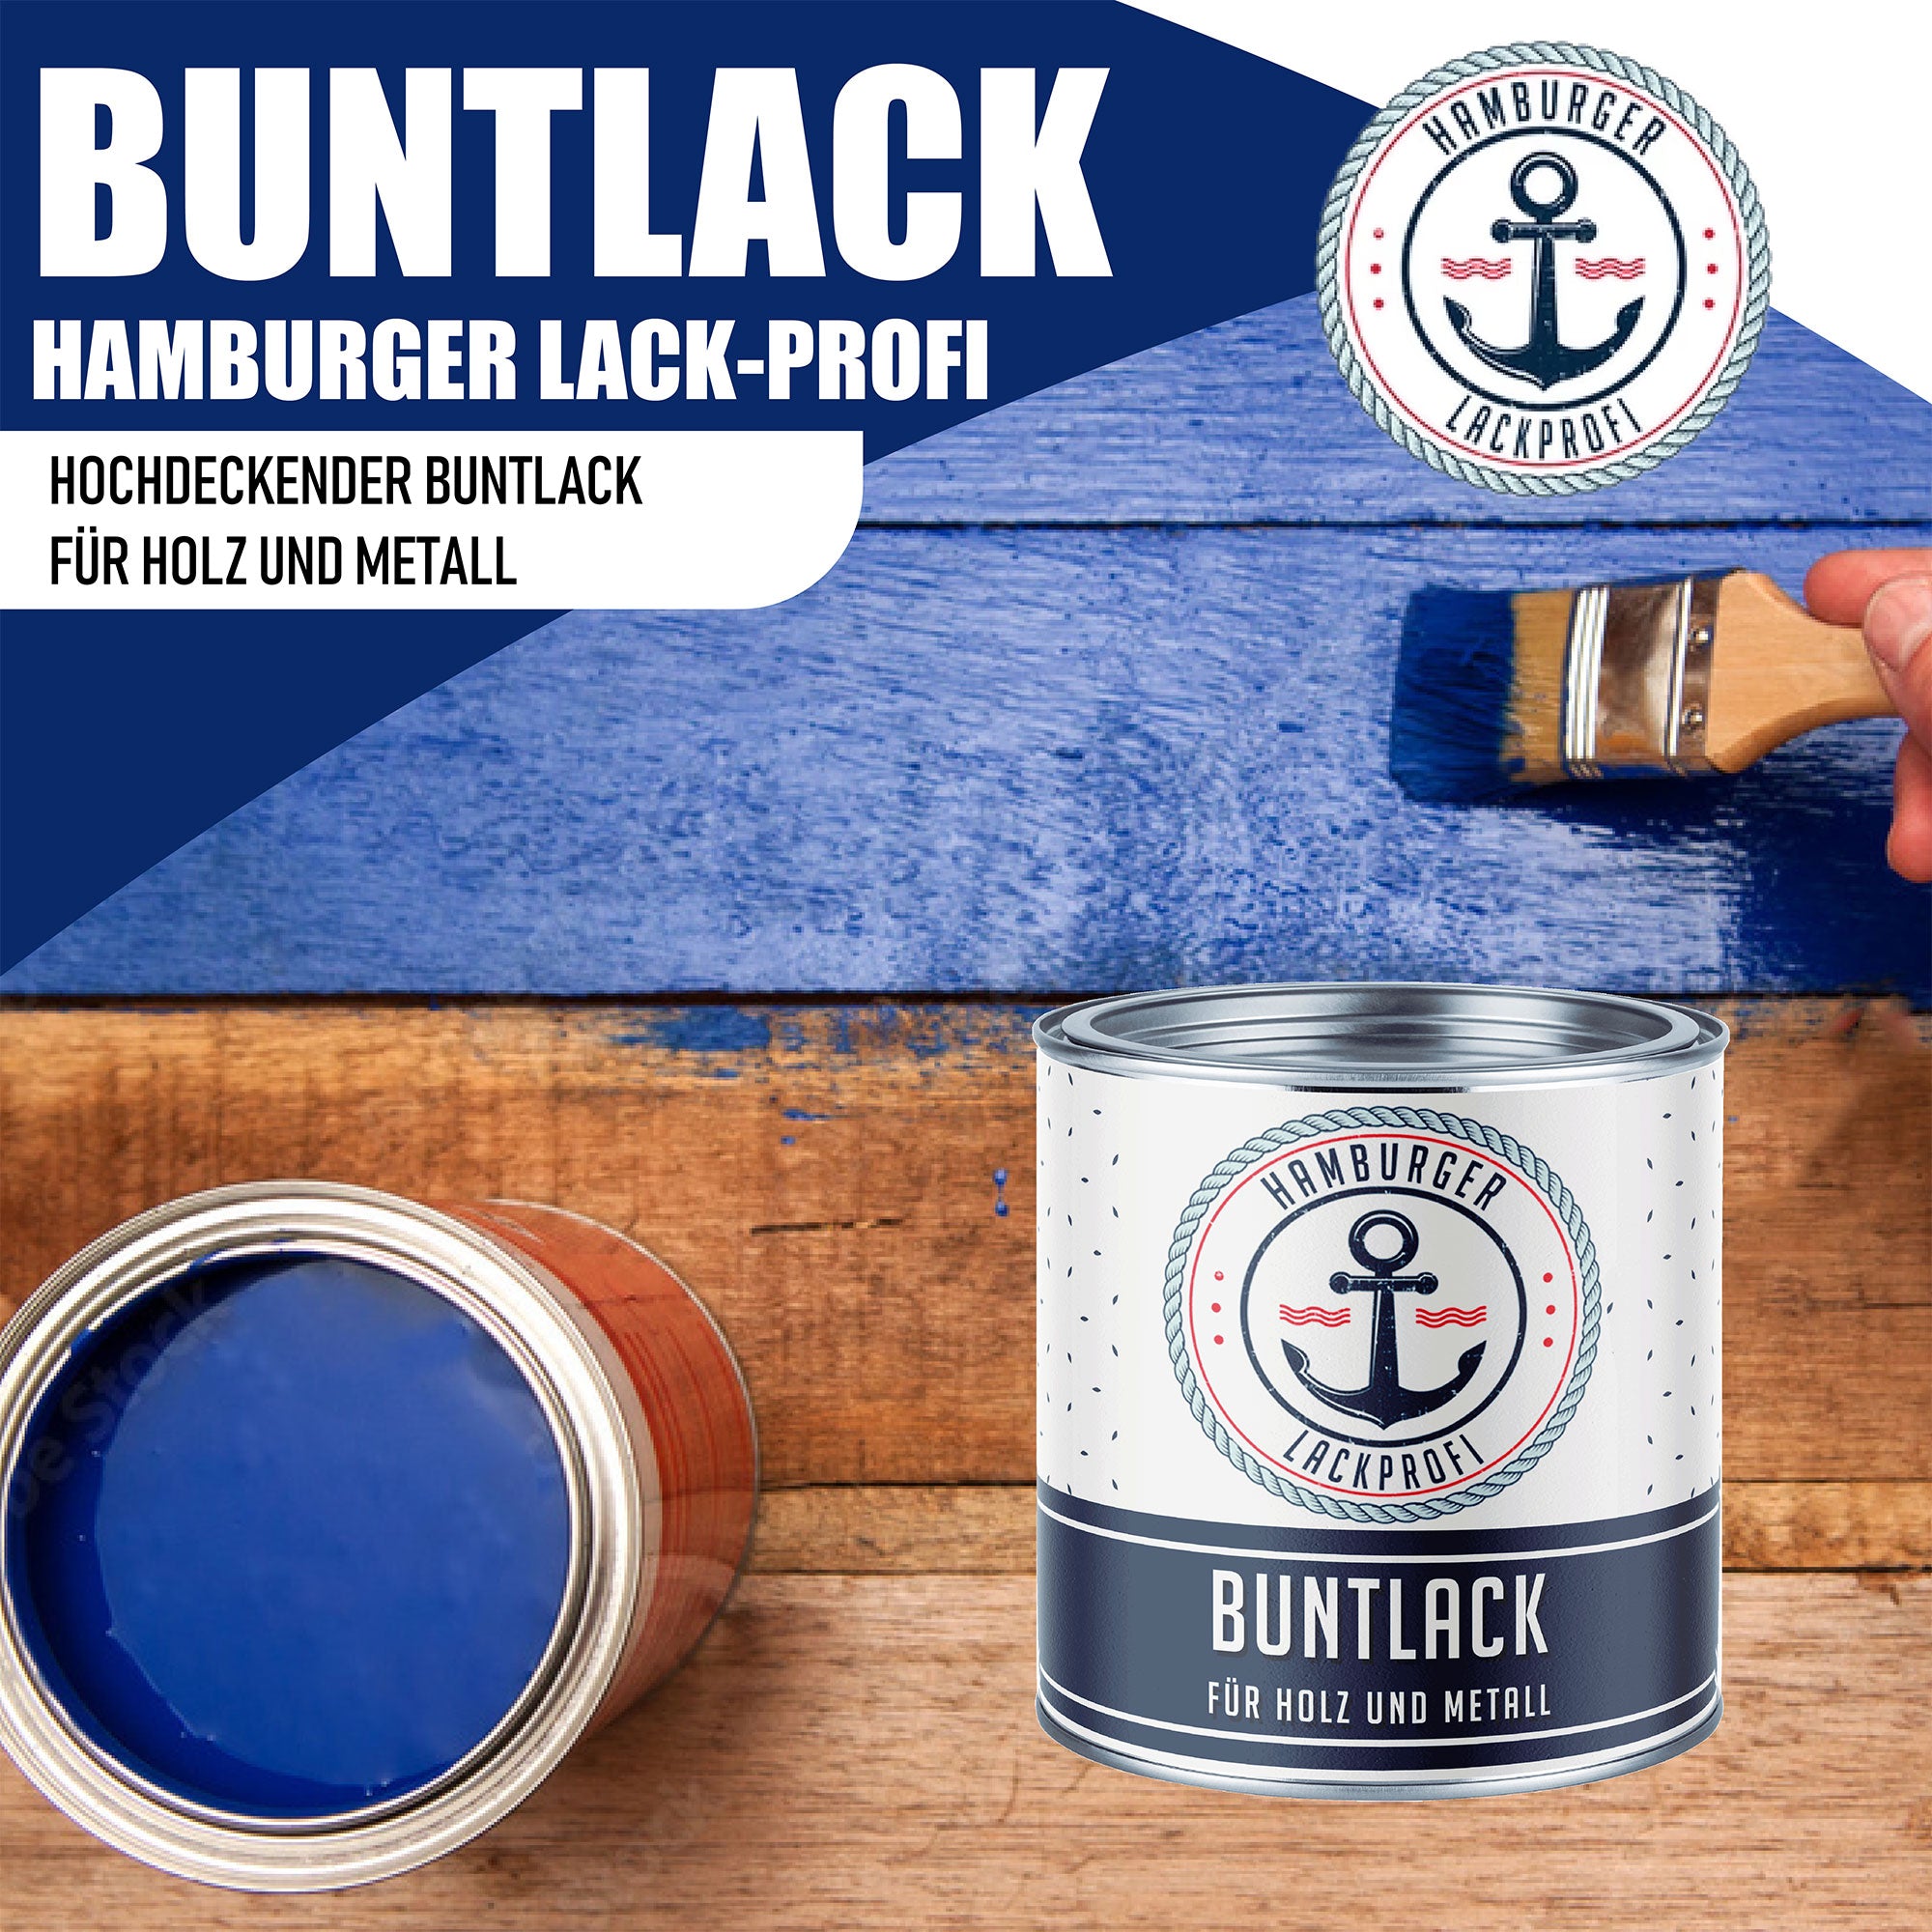 Hamburger Lack-Profi Buntlack Graubraun RAL 8019 - Robuster Kunstharzlack